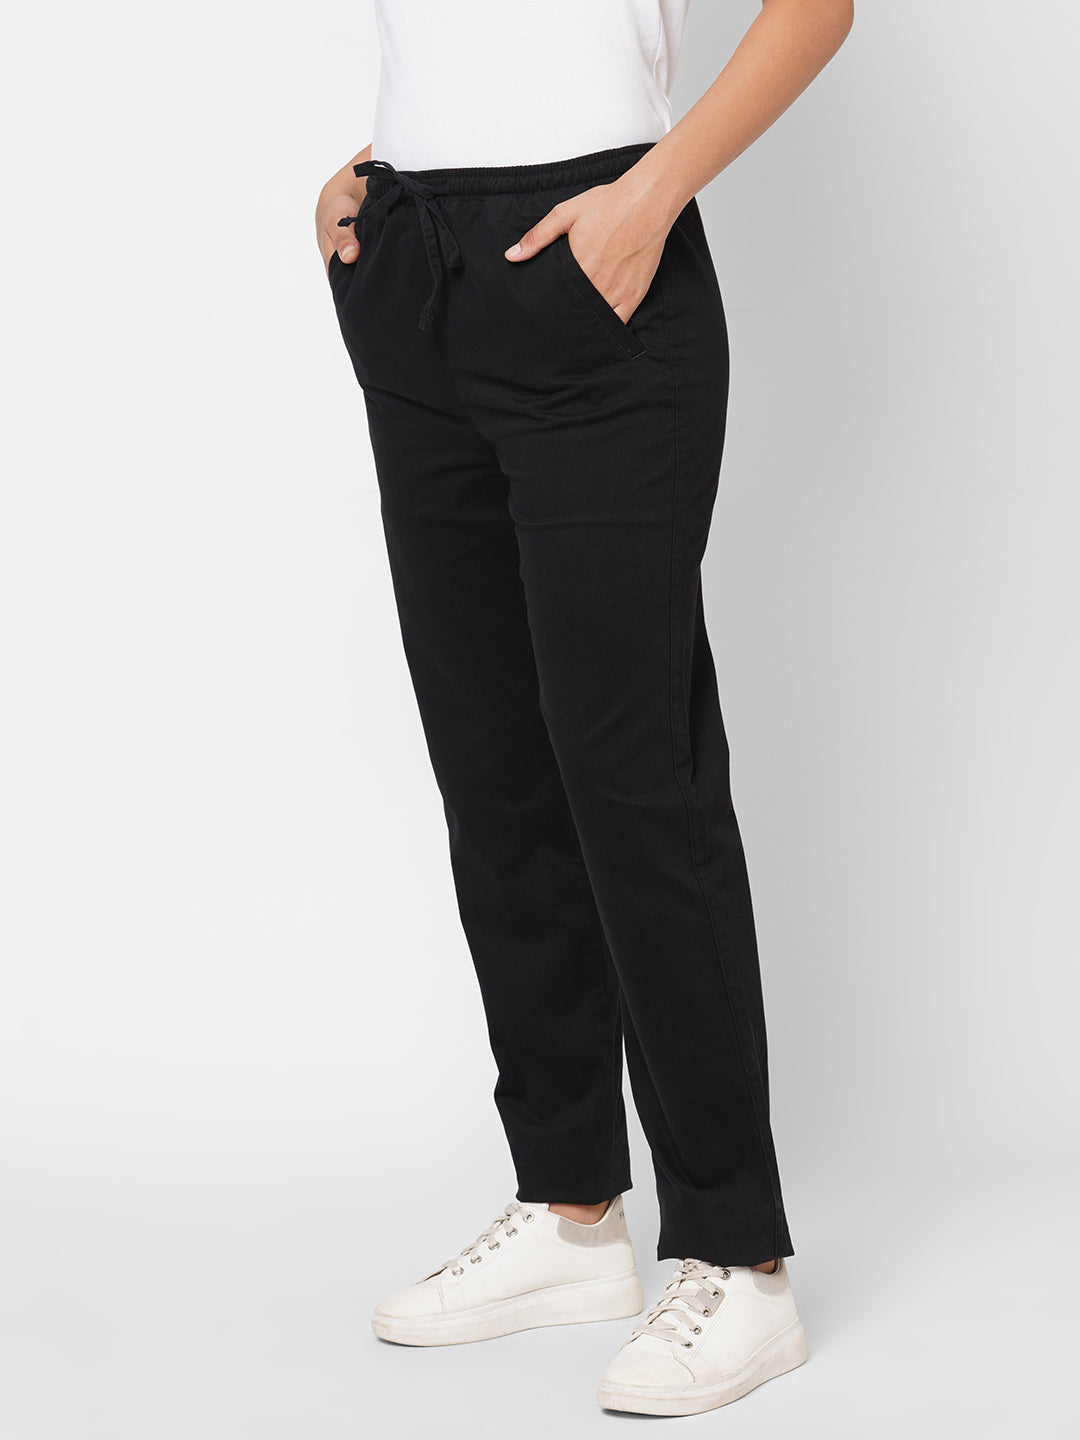 Buy khaki Trousers  Pants for Women by LEVIS Online  Ajiocom